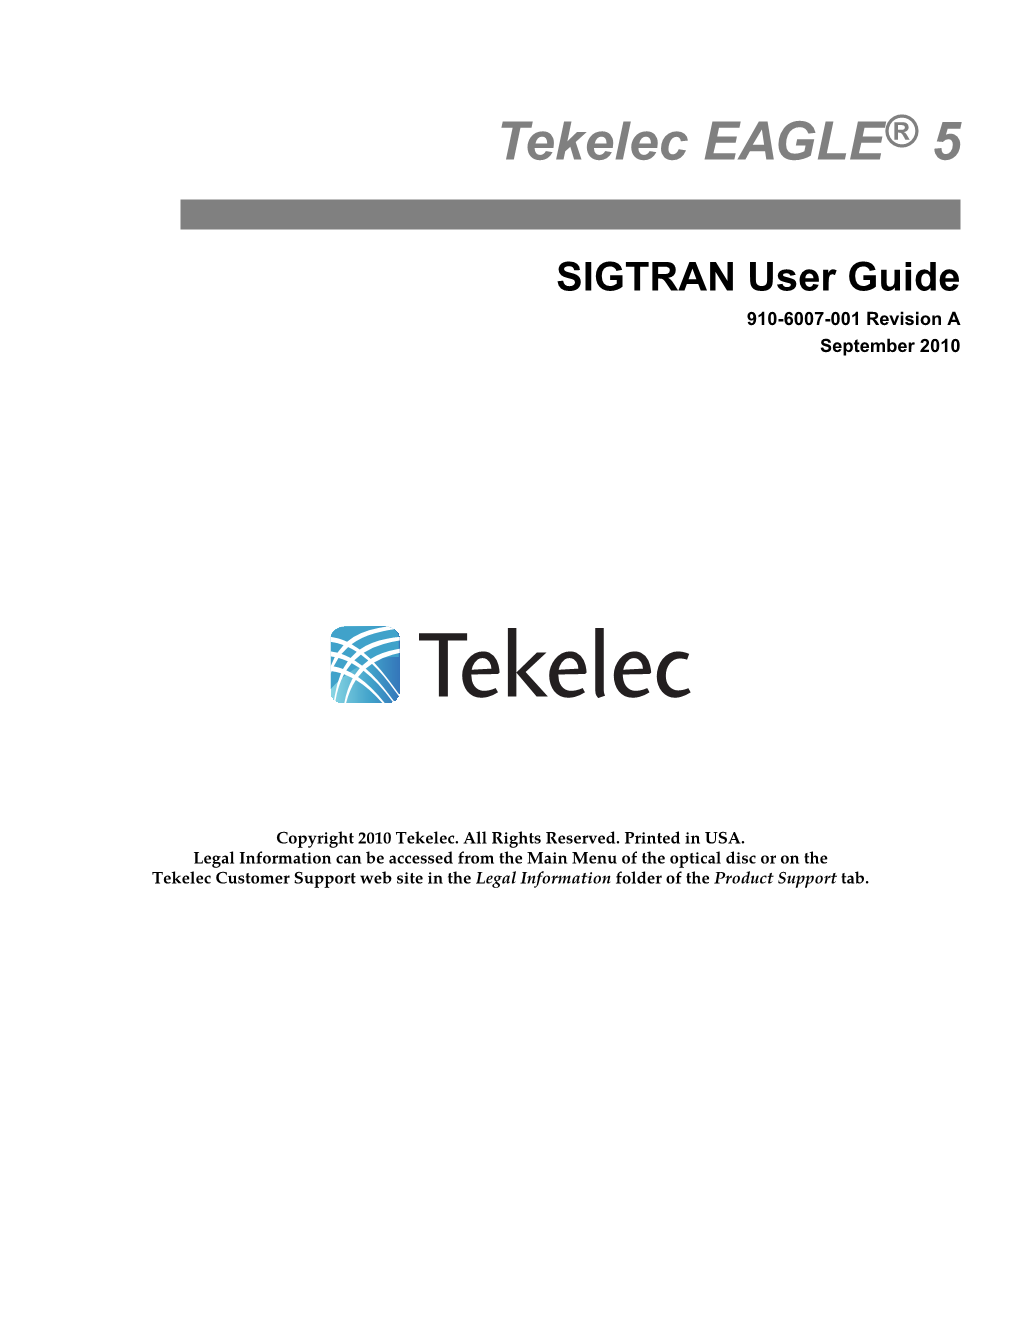 SIGTRAN User Guide 910-6007-001 Revision a September 2010